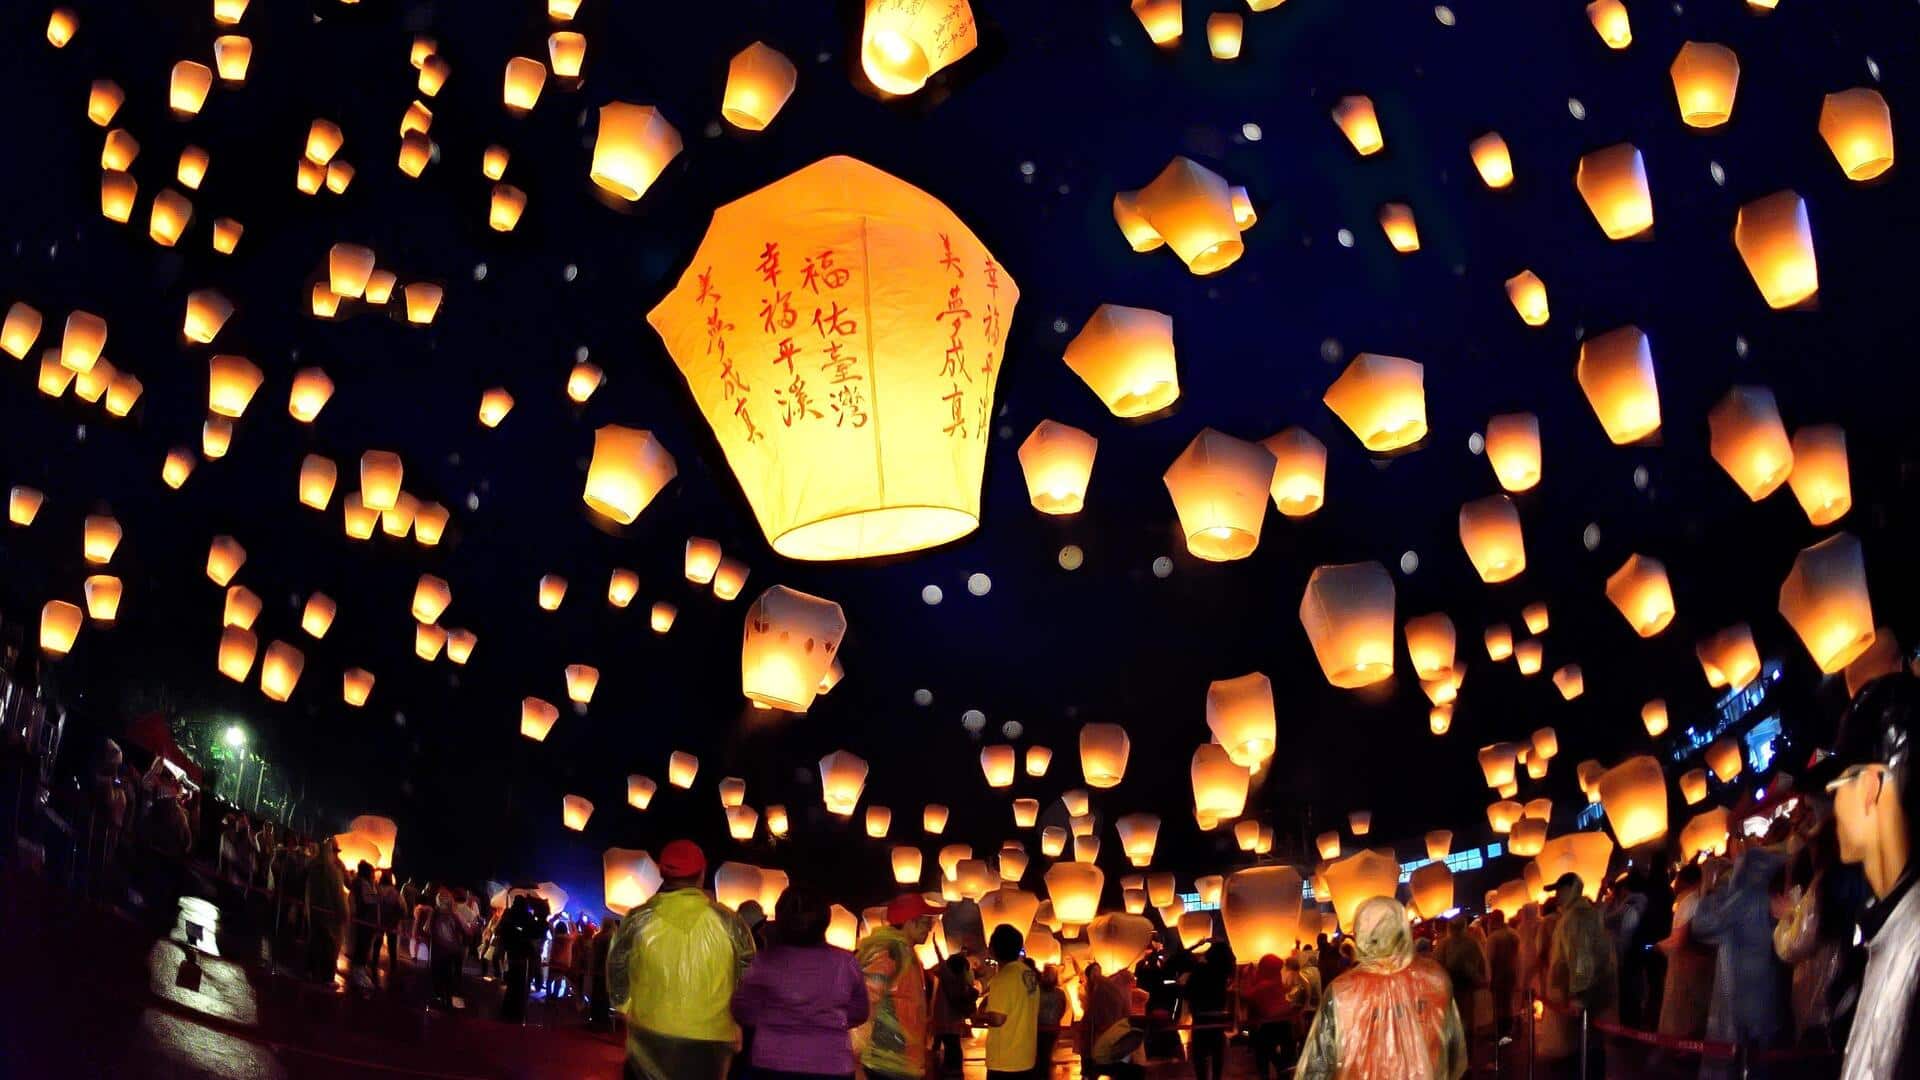 Pingxi Lantern Festival: Of lights, handwritten wishes, tranquility  